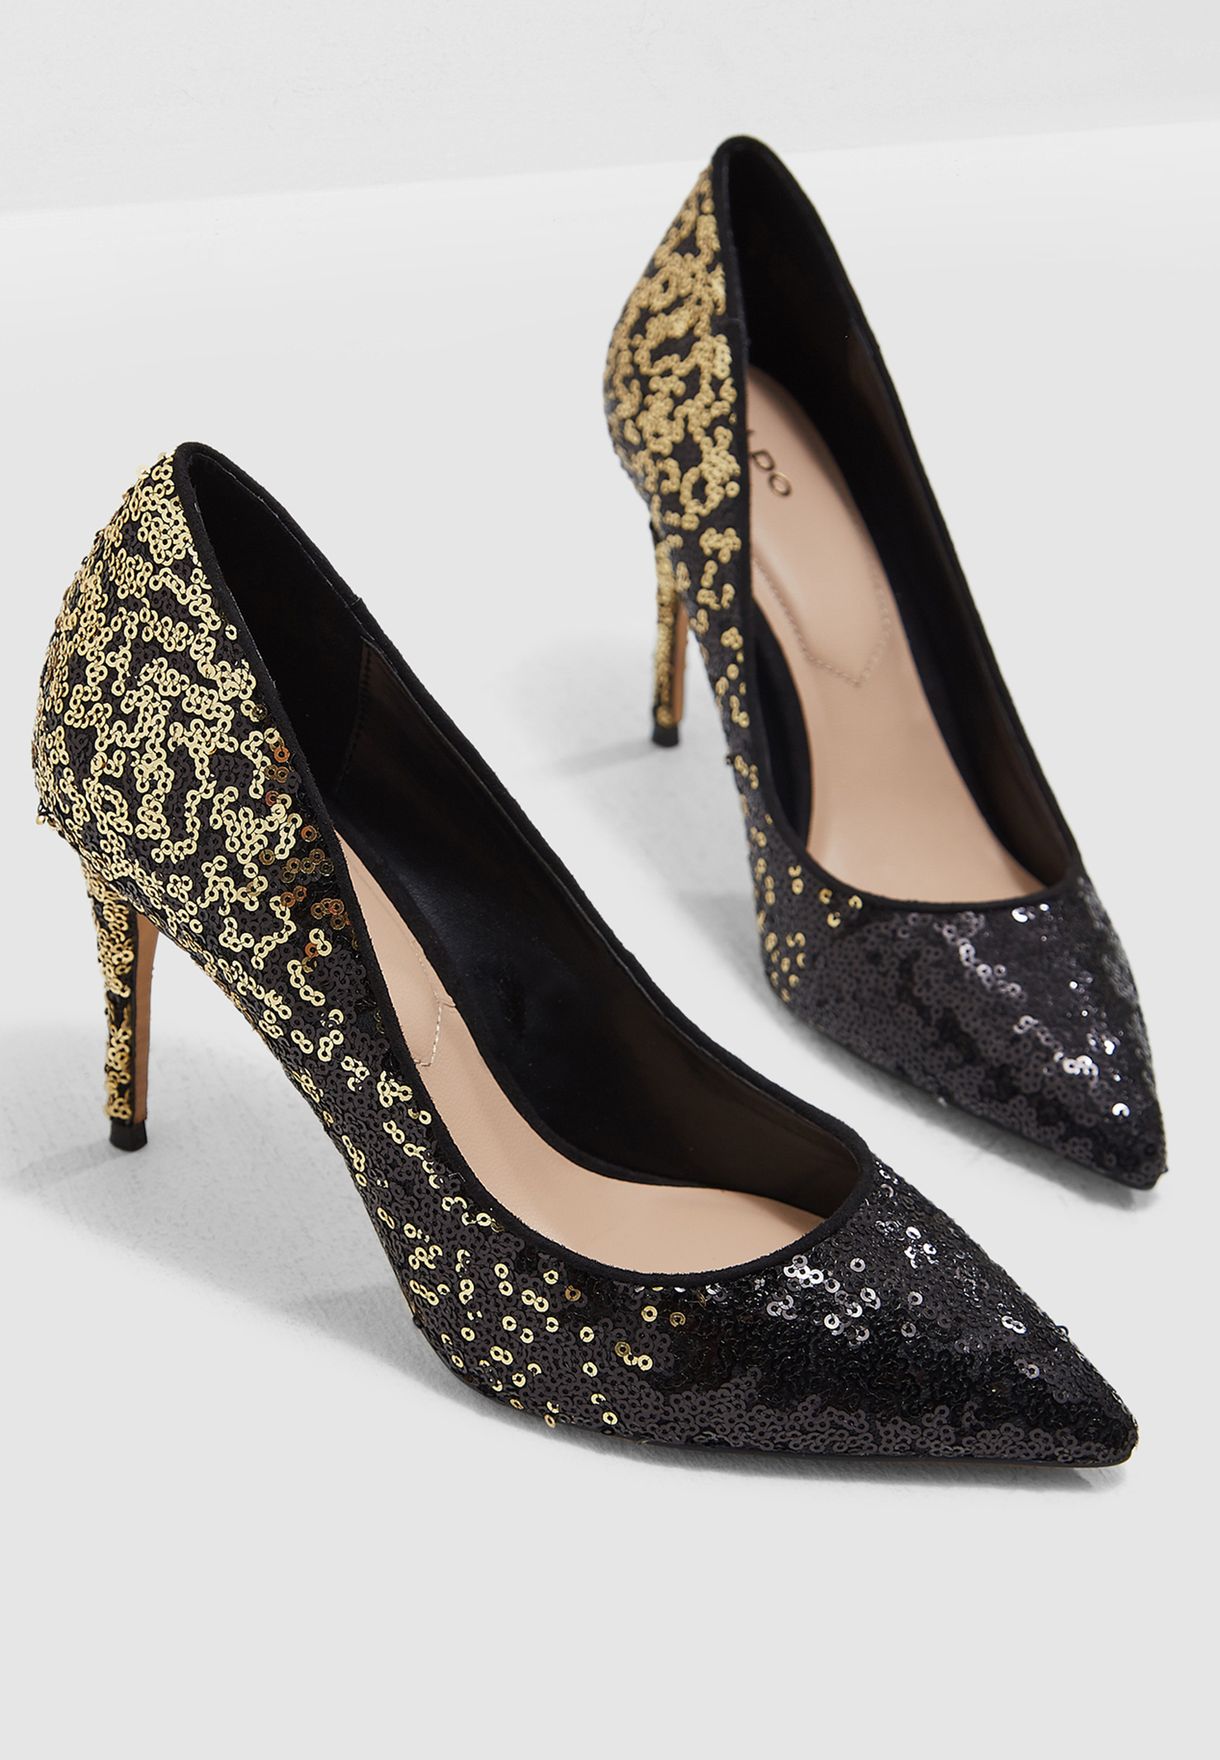 aldo black and gold heels